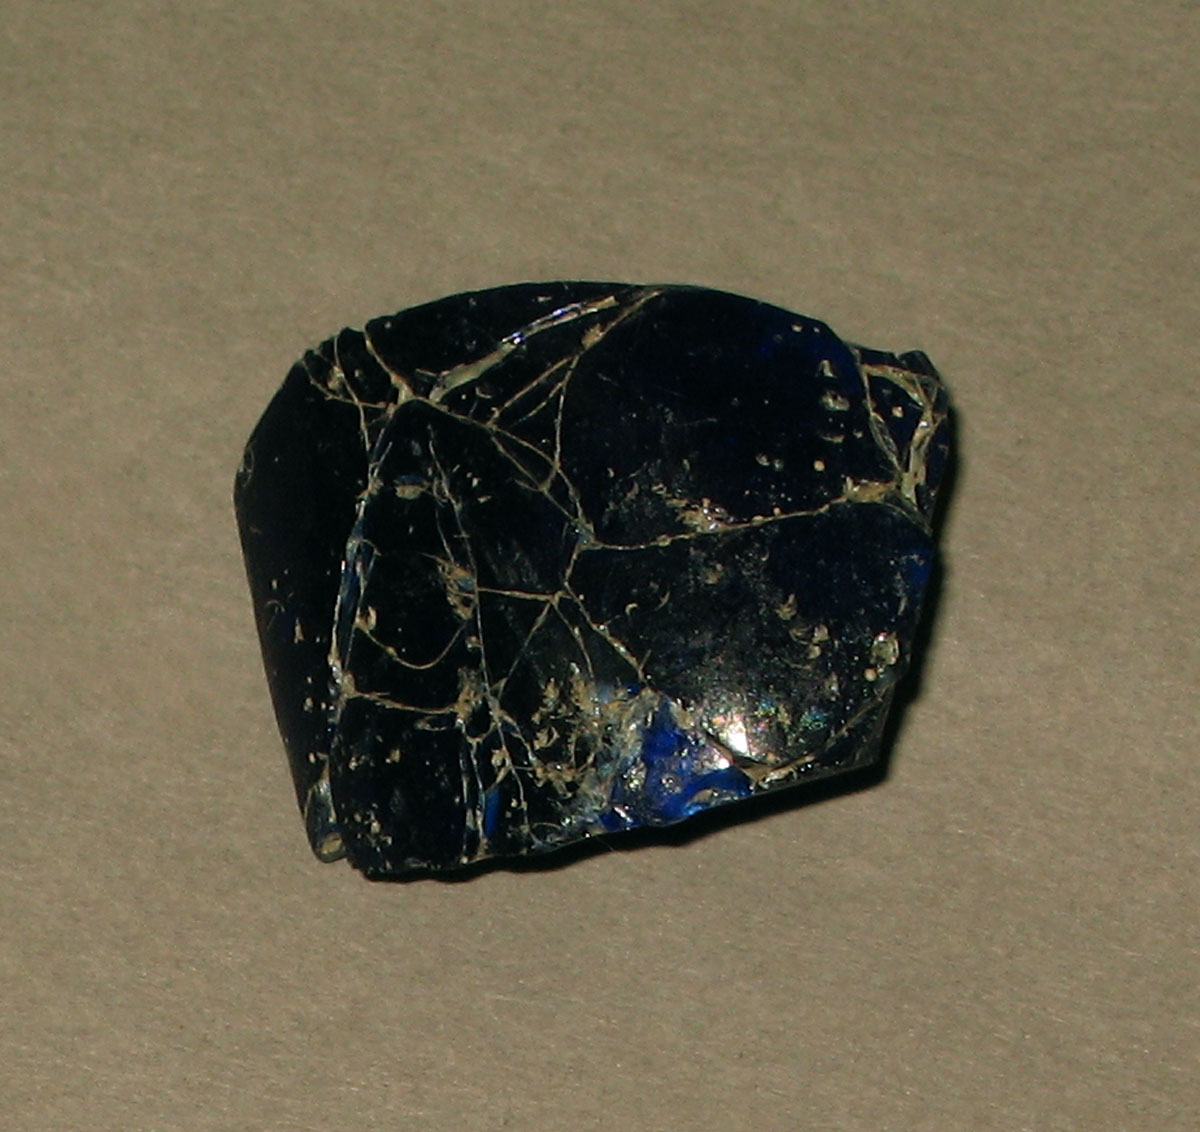 1958.0002.006.048 Glass fragment